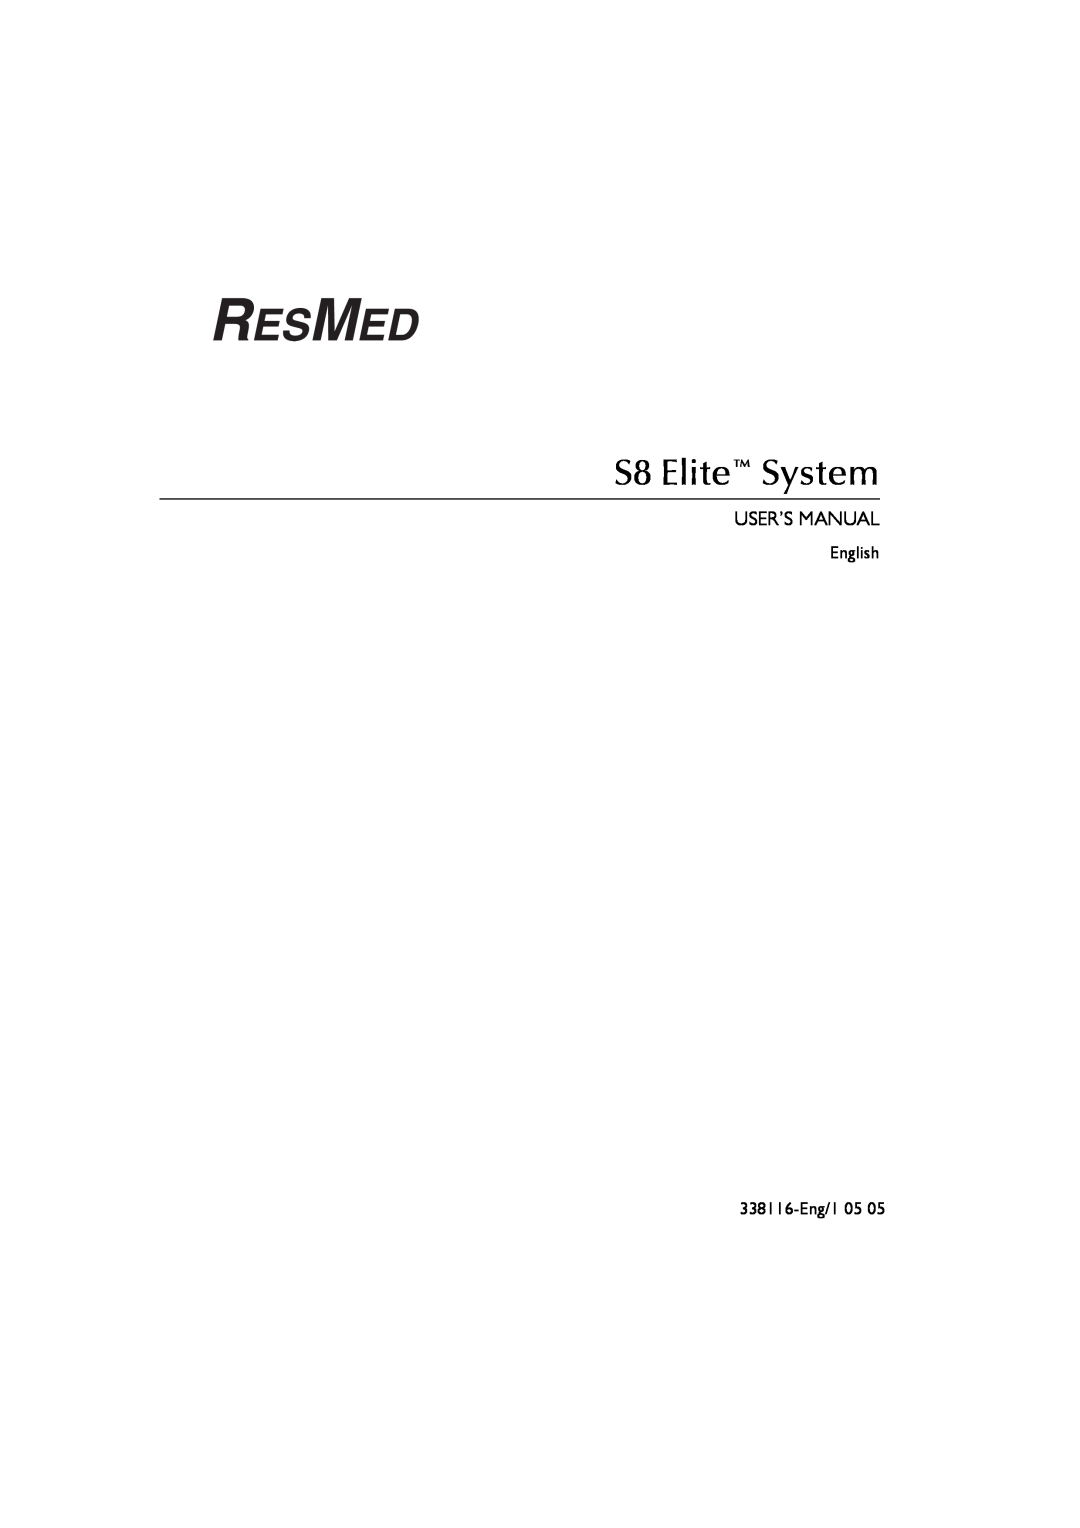 ResMed s8 manual S8 AutoSet Spirit System, Illustrations 